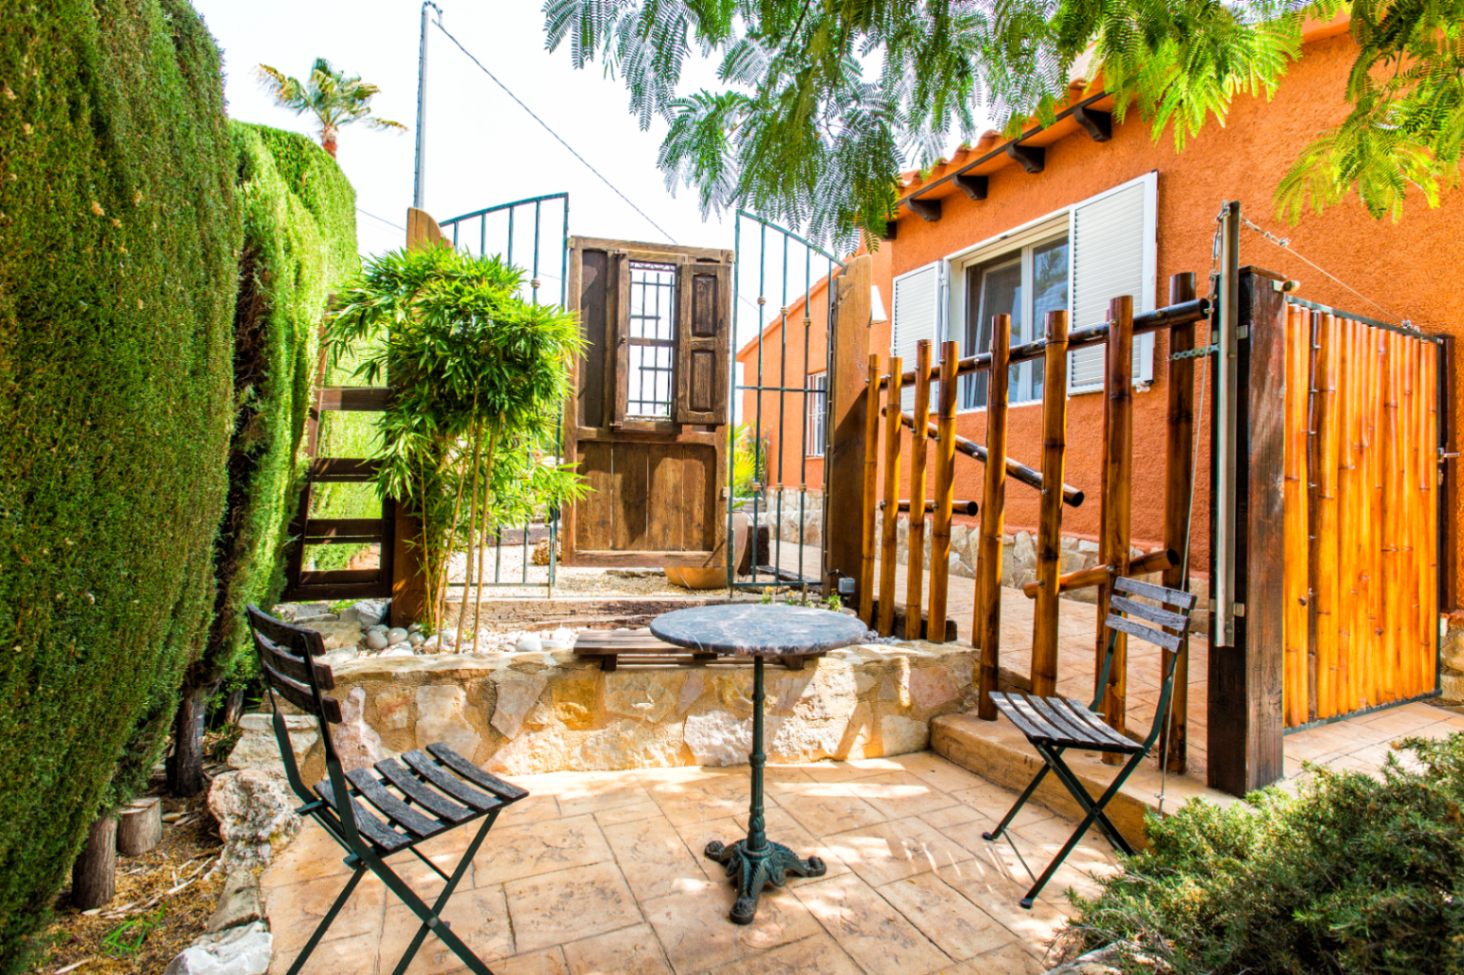 Private spacious villa for sale in Calpe